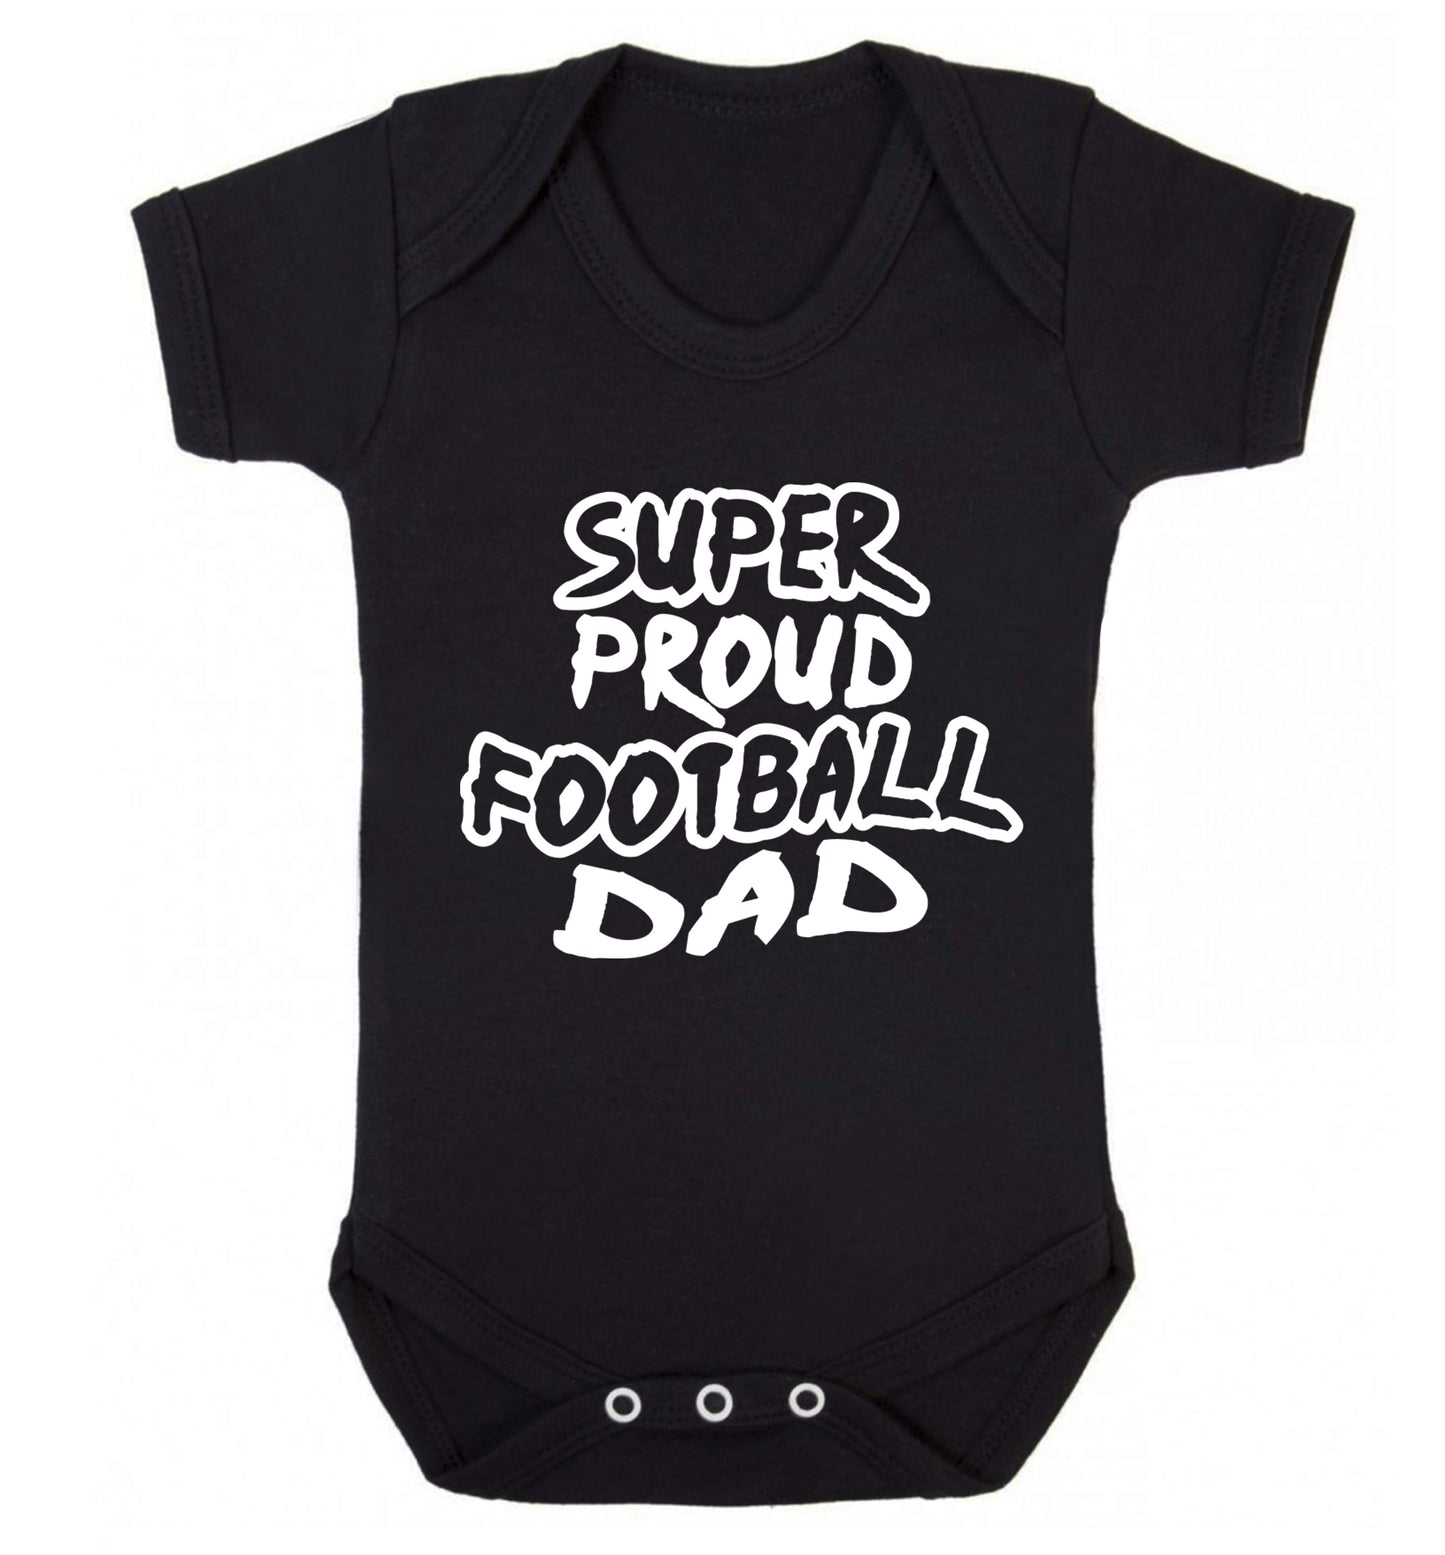 Super proud football dad Baby Vest black 18-24 months